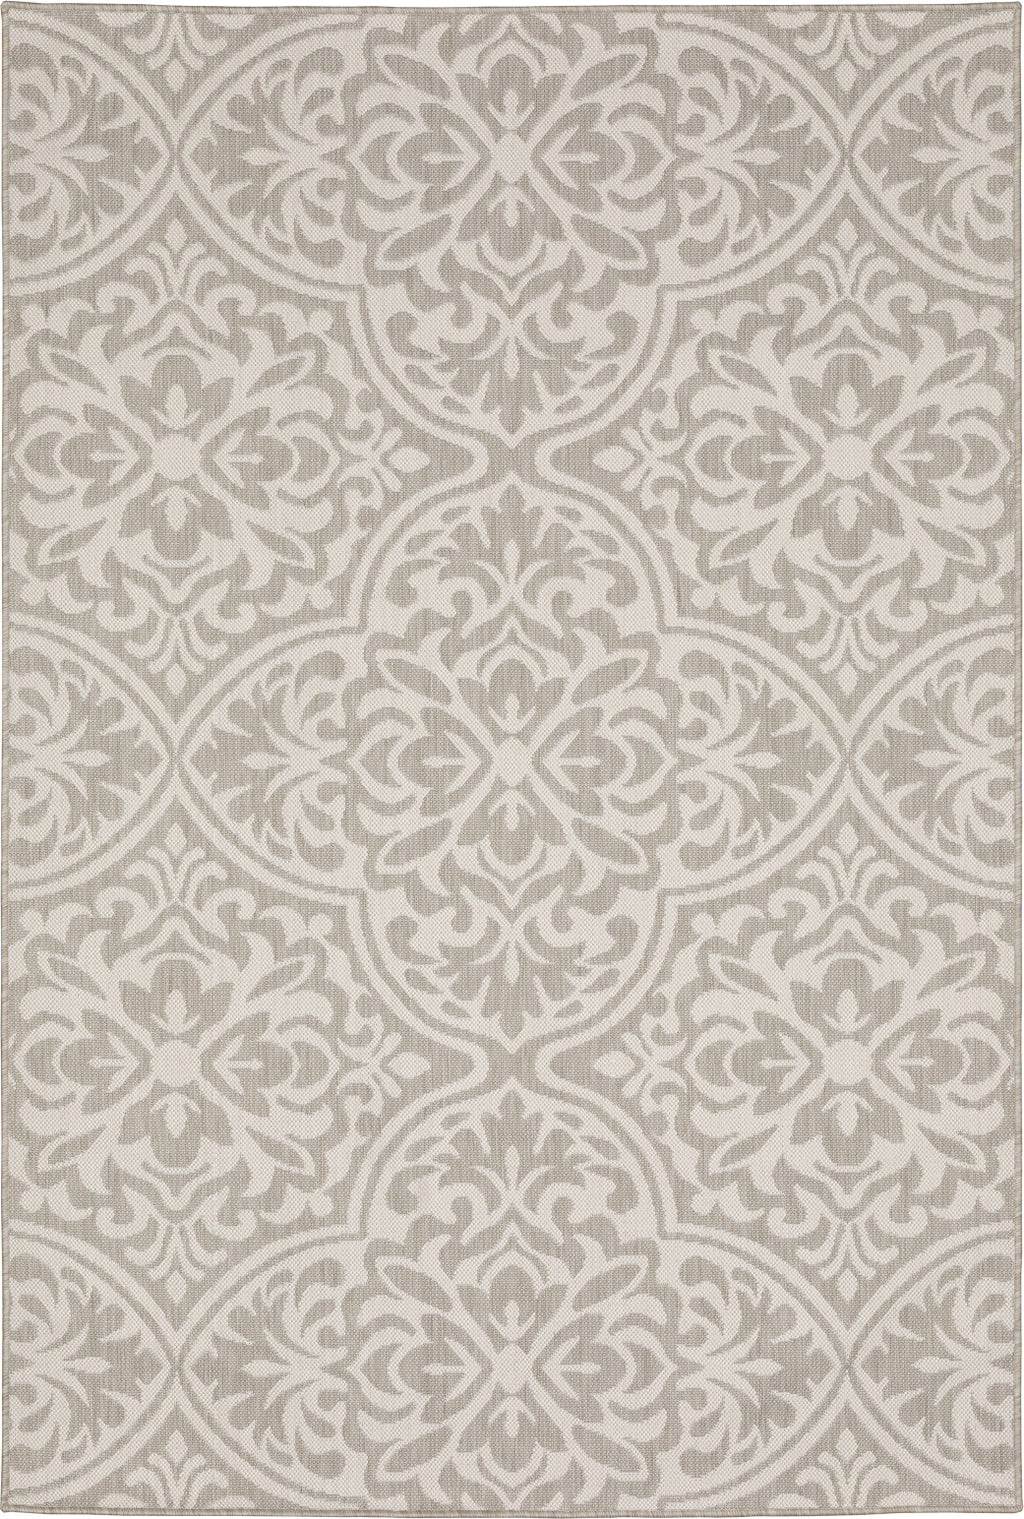 Oriental Weavers Portofino 1831H Grey/Ivory Area Rug main image featured